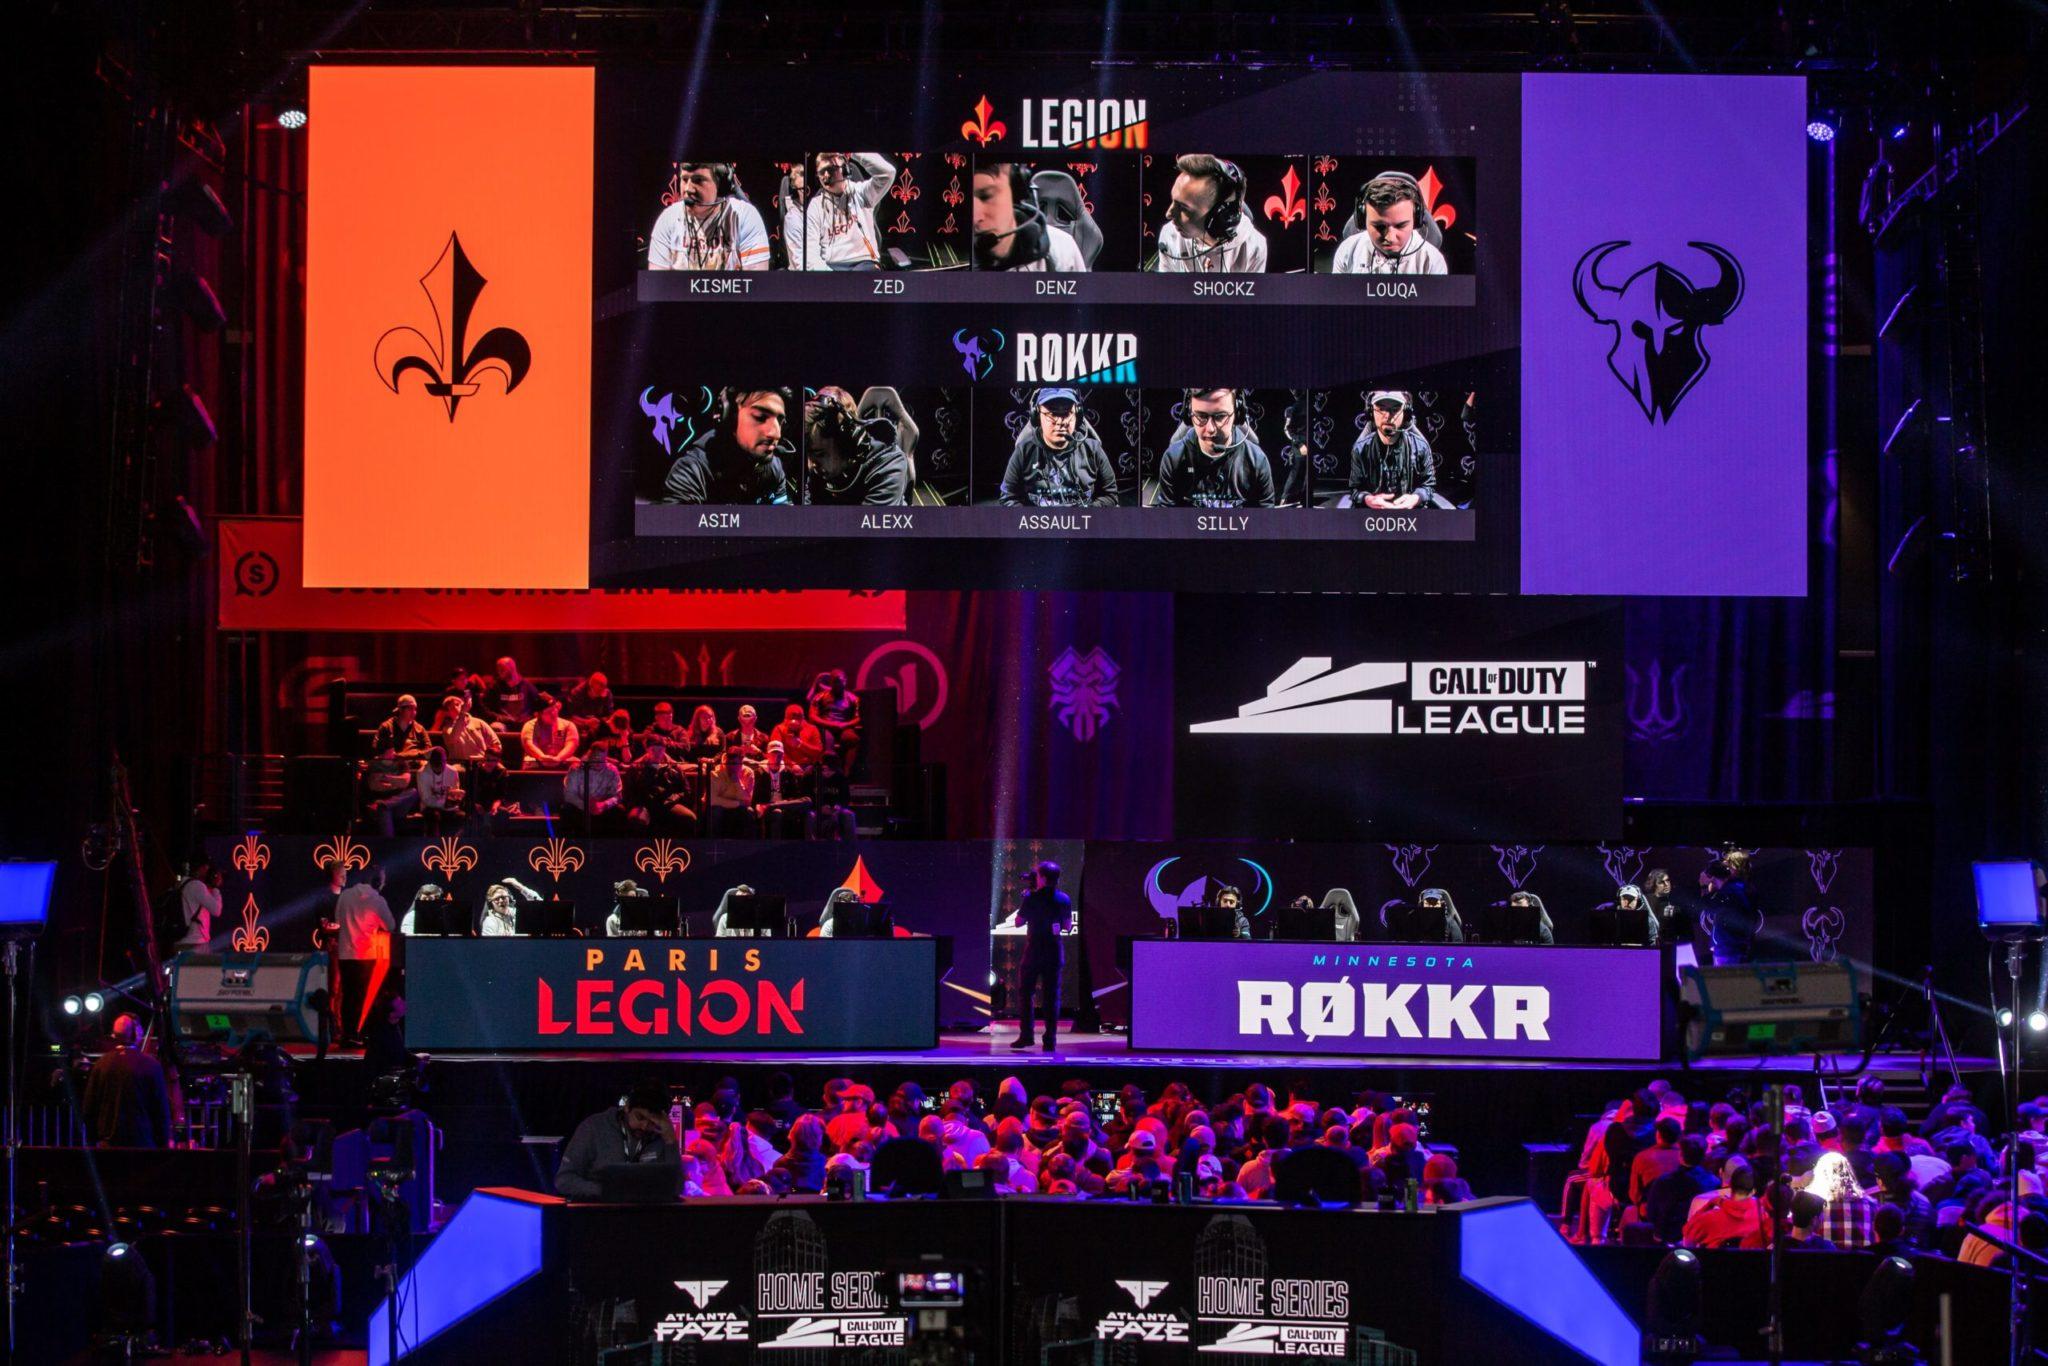 Paris Legion and Minnesota RØKKR at Call of Duty League